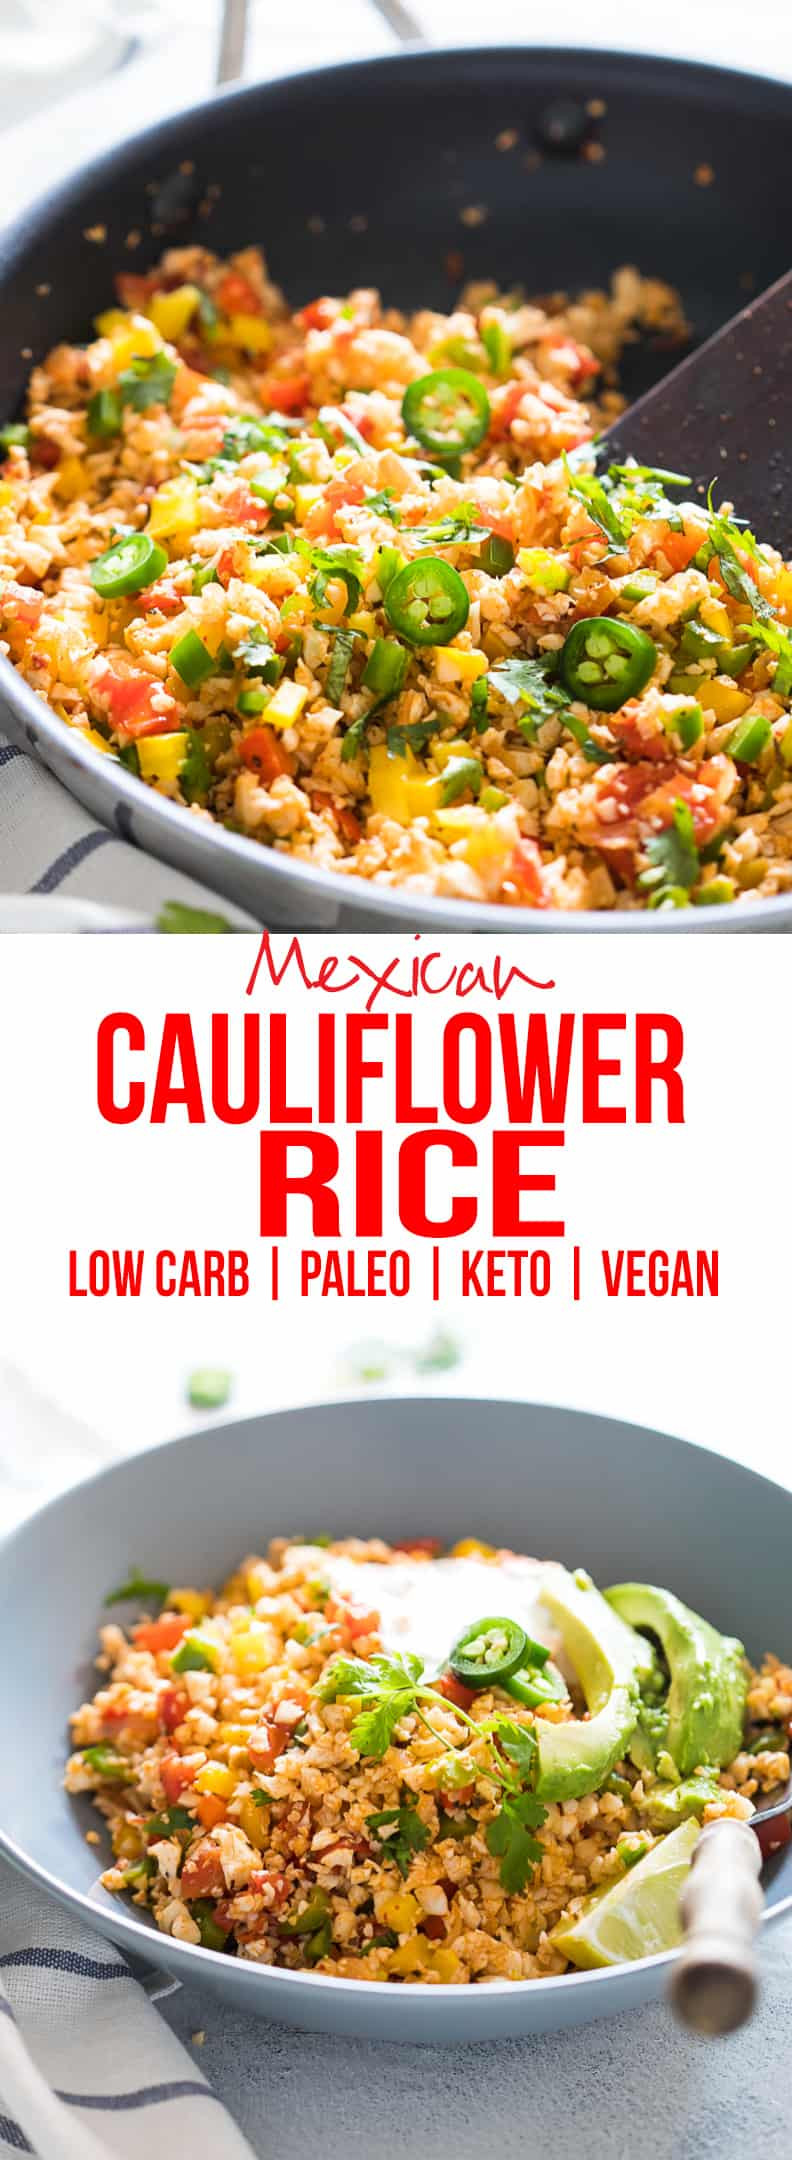 Mexican Keto Recipes Low Carb
 Low Carb Mexican Cauliflower Rice Paleo Vegan Keto